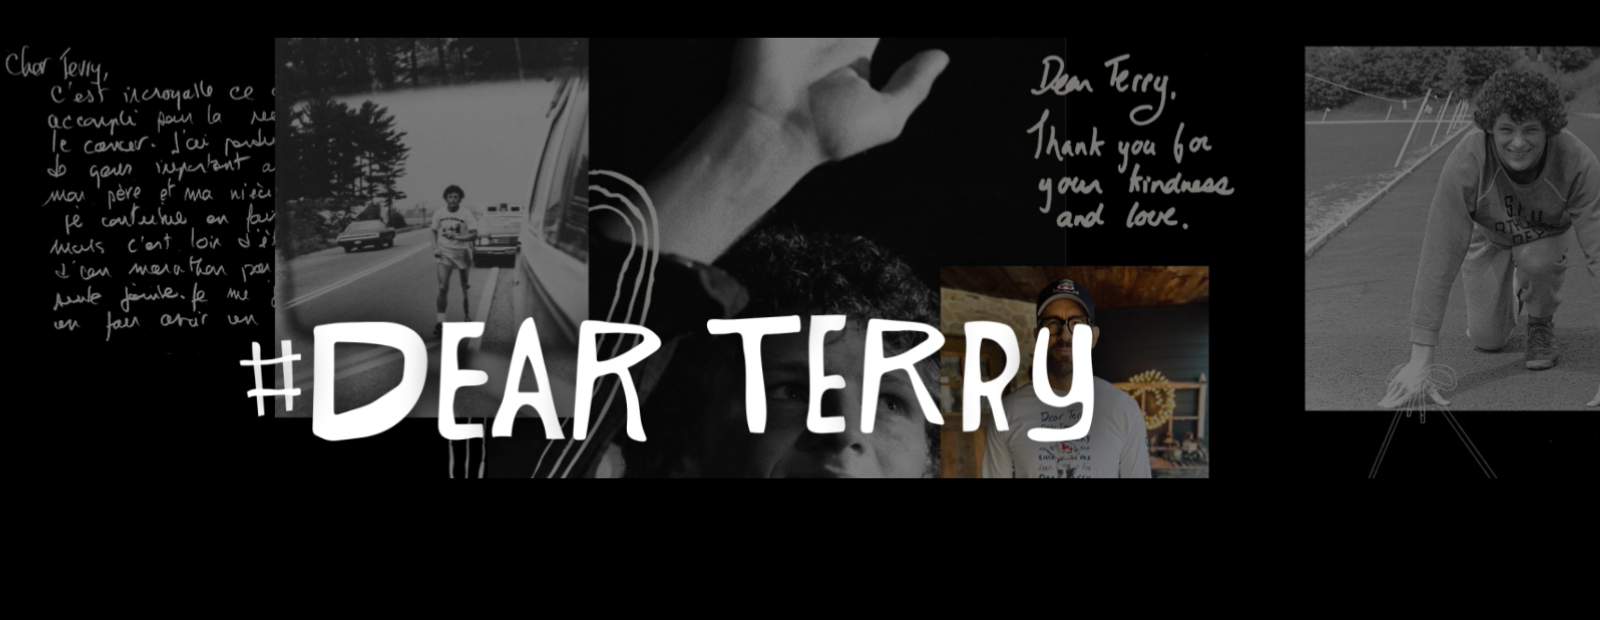 Terry Fox Run Donation